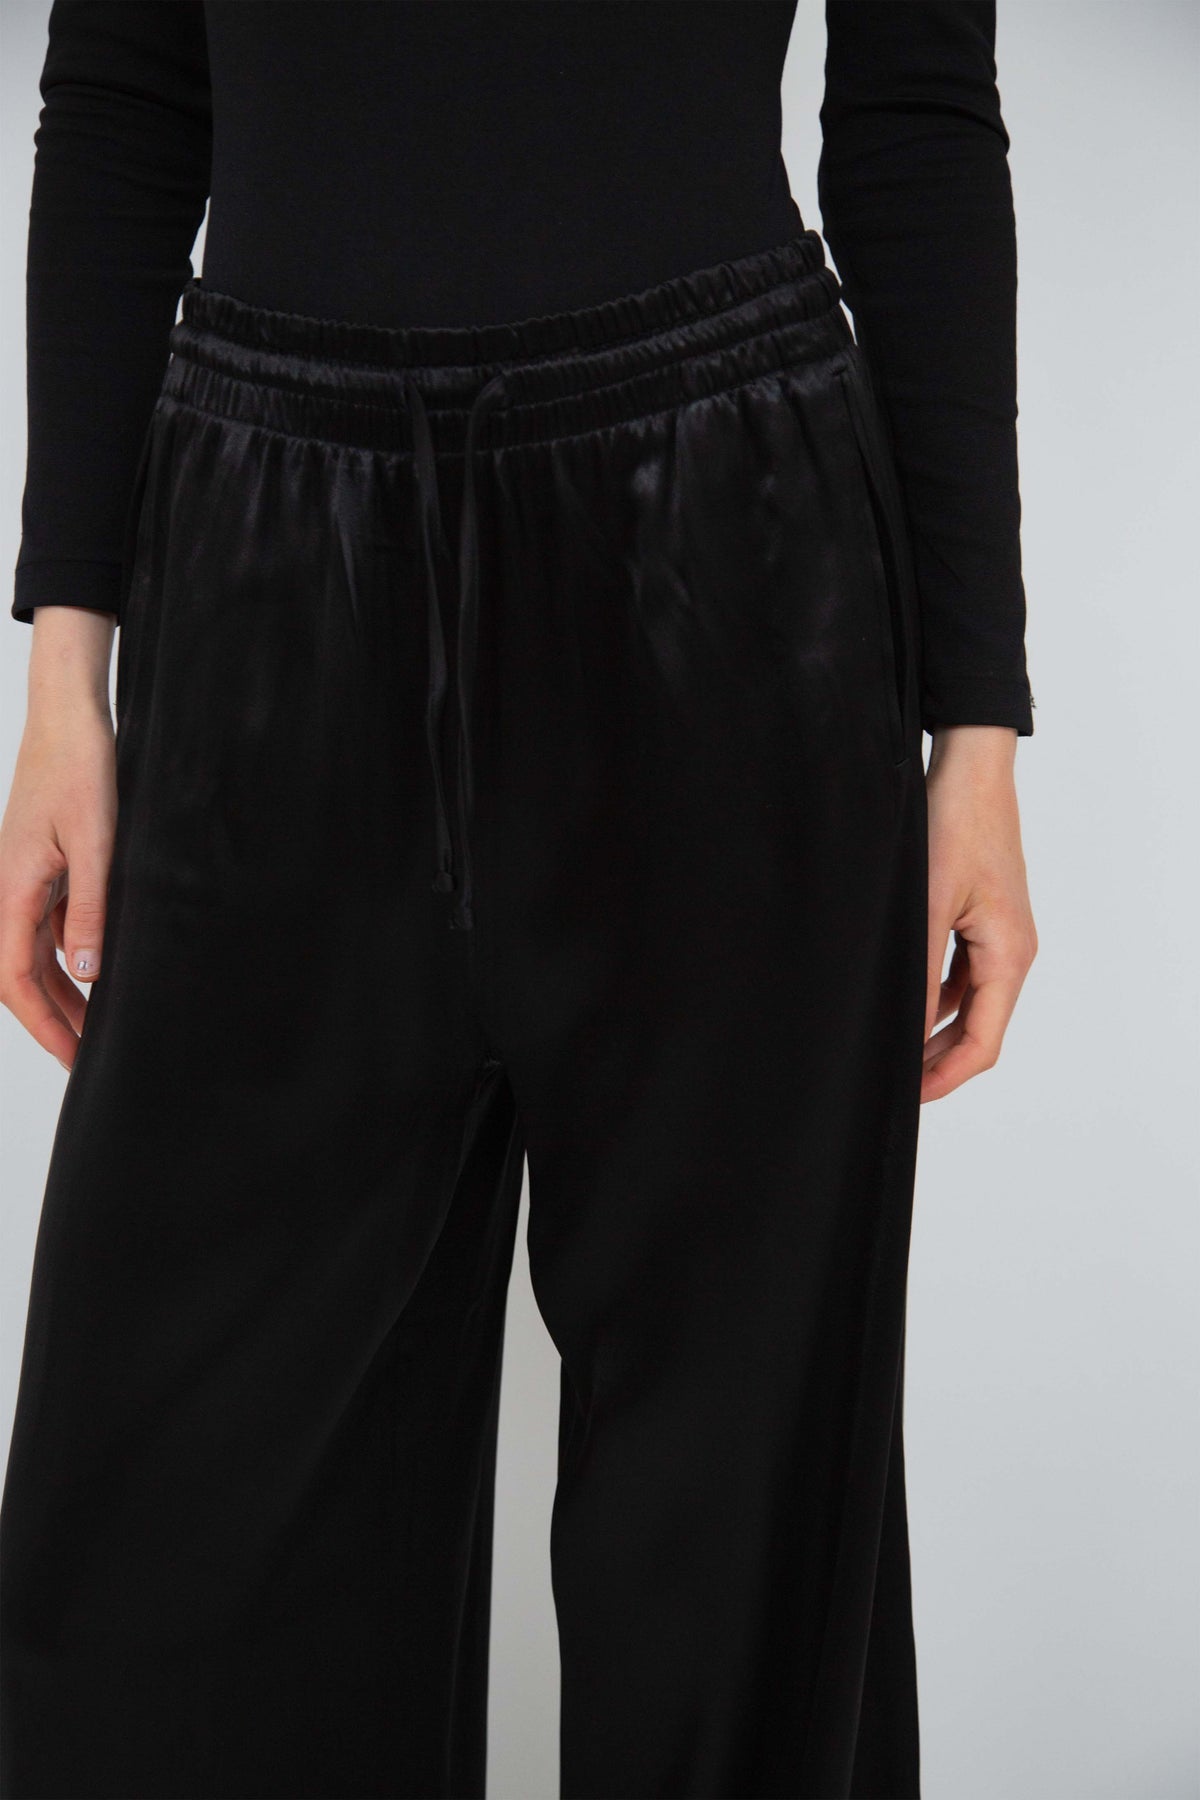 Yves Saint Laurent silk pants